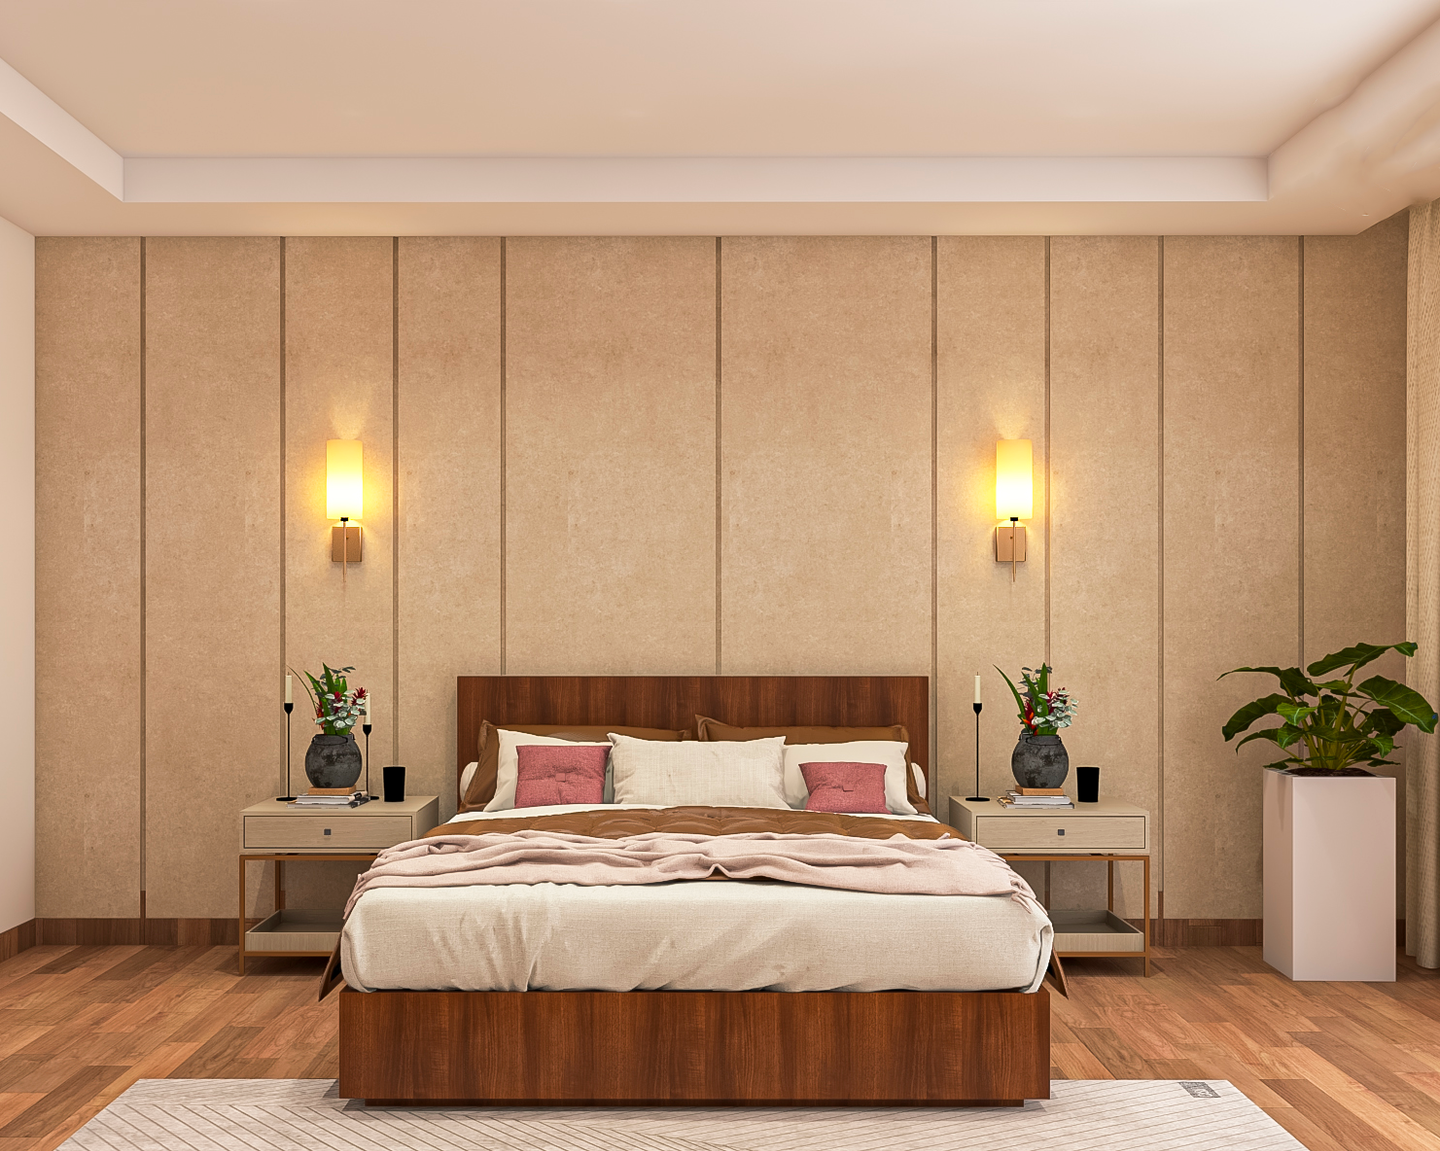 Classic Master Bedroom Design With Brown Tones - Livspace